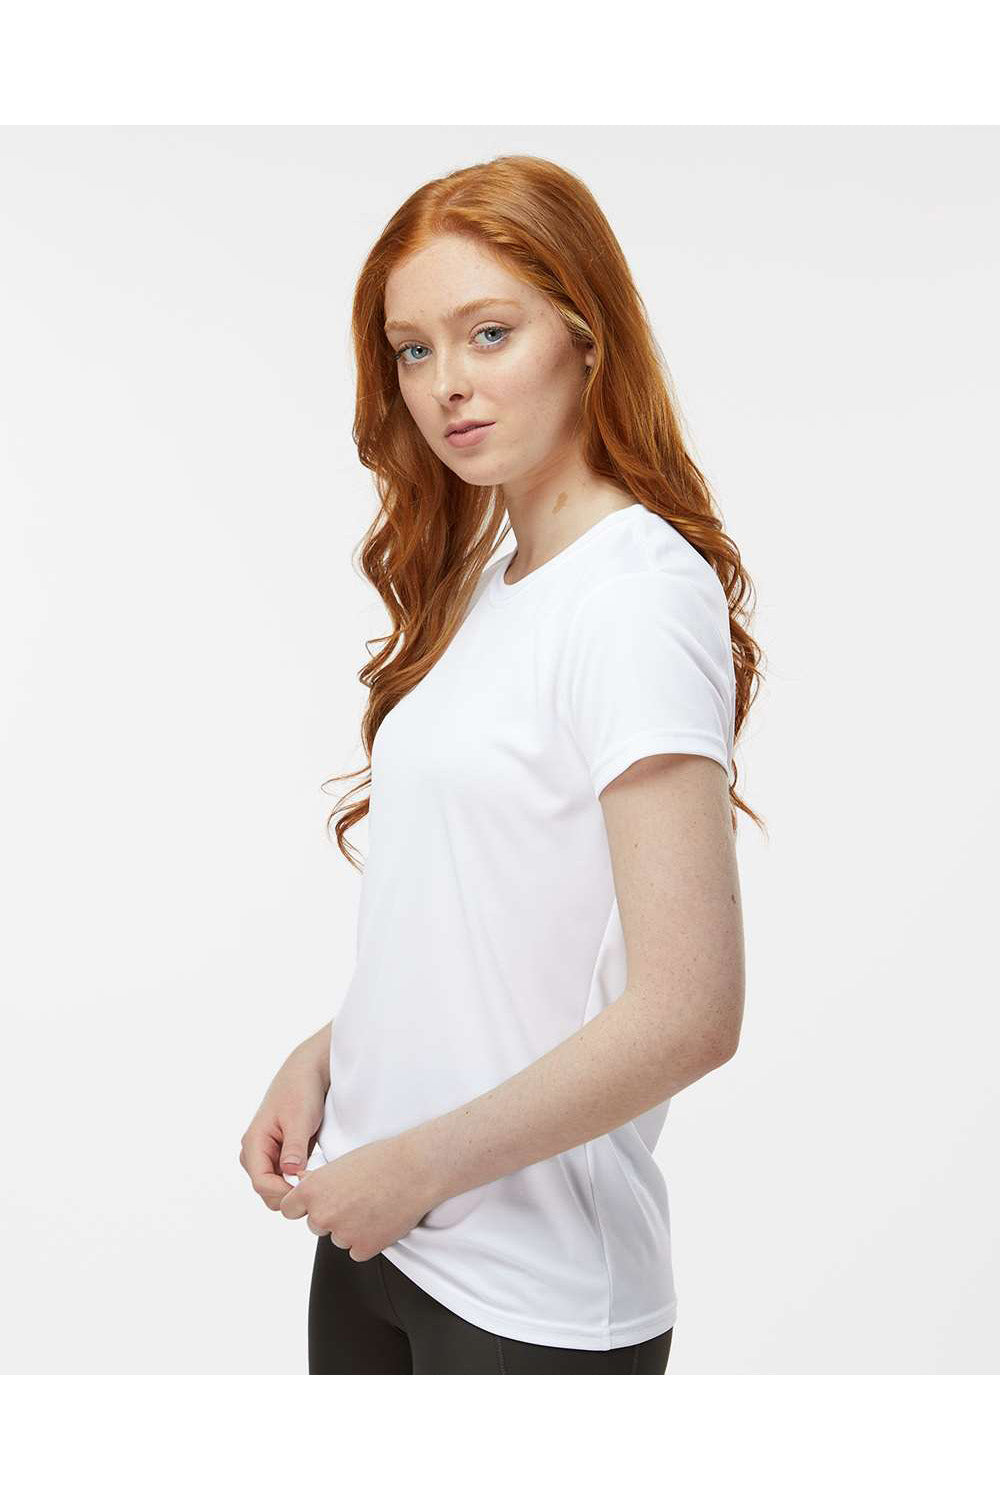 Paragon 204 Womens Islander Performance Short Sleeve Crewneck T-Shirt White Model Side